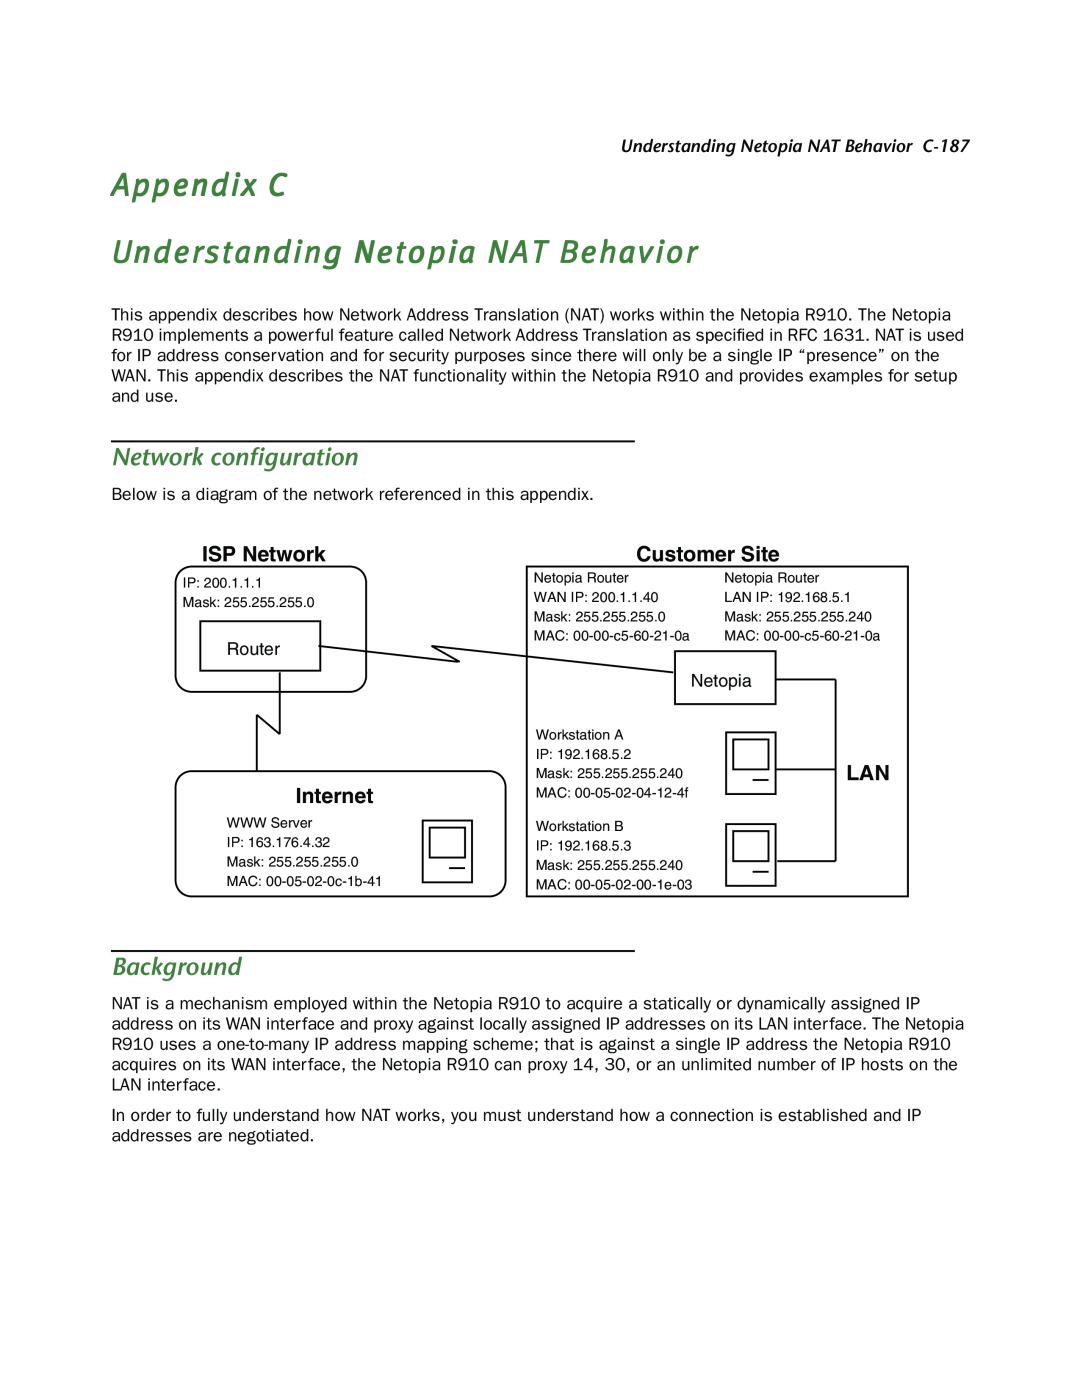 Netopia R910 manual Appendix C Understanding Netopia NAT Behavior, Network conﬁguration, Background, ISP Network, Internet 